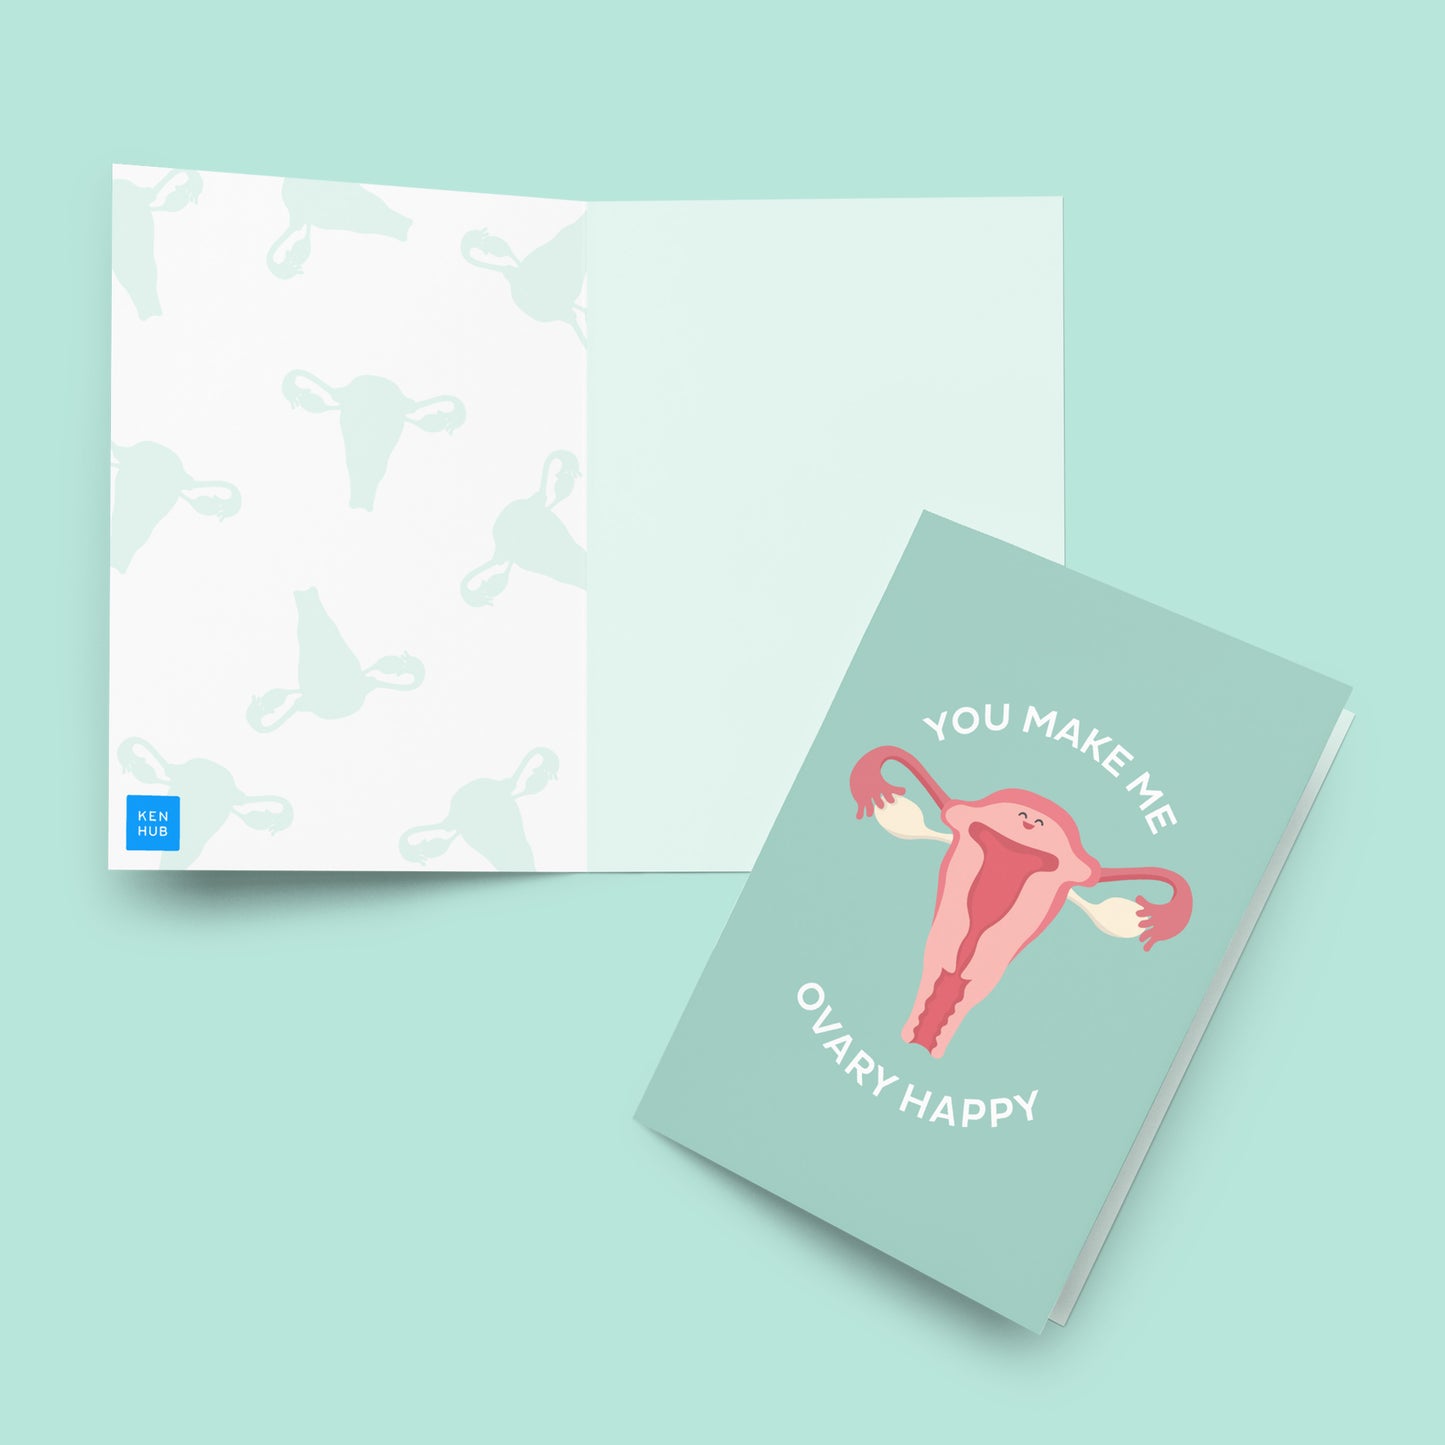 Ovary happy - Greeting card